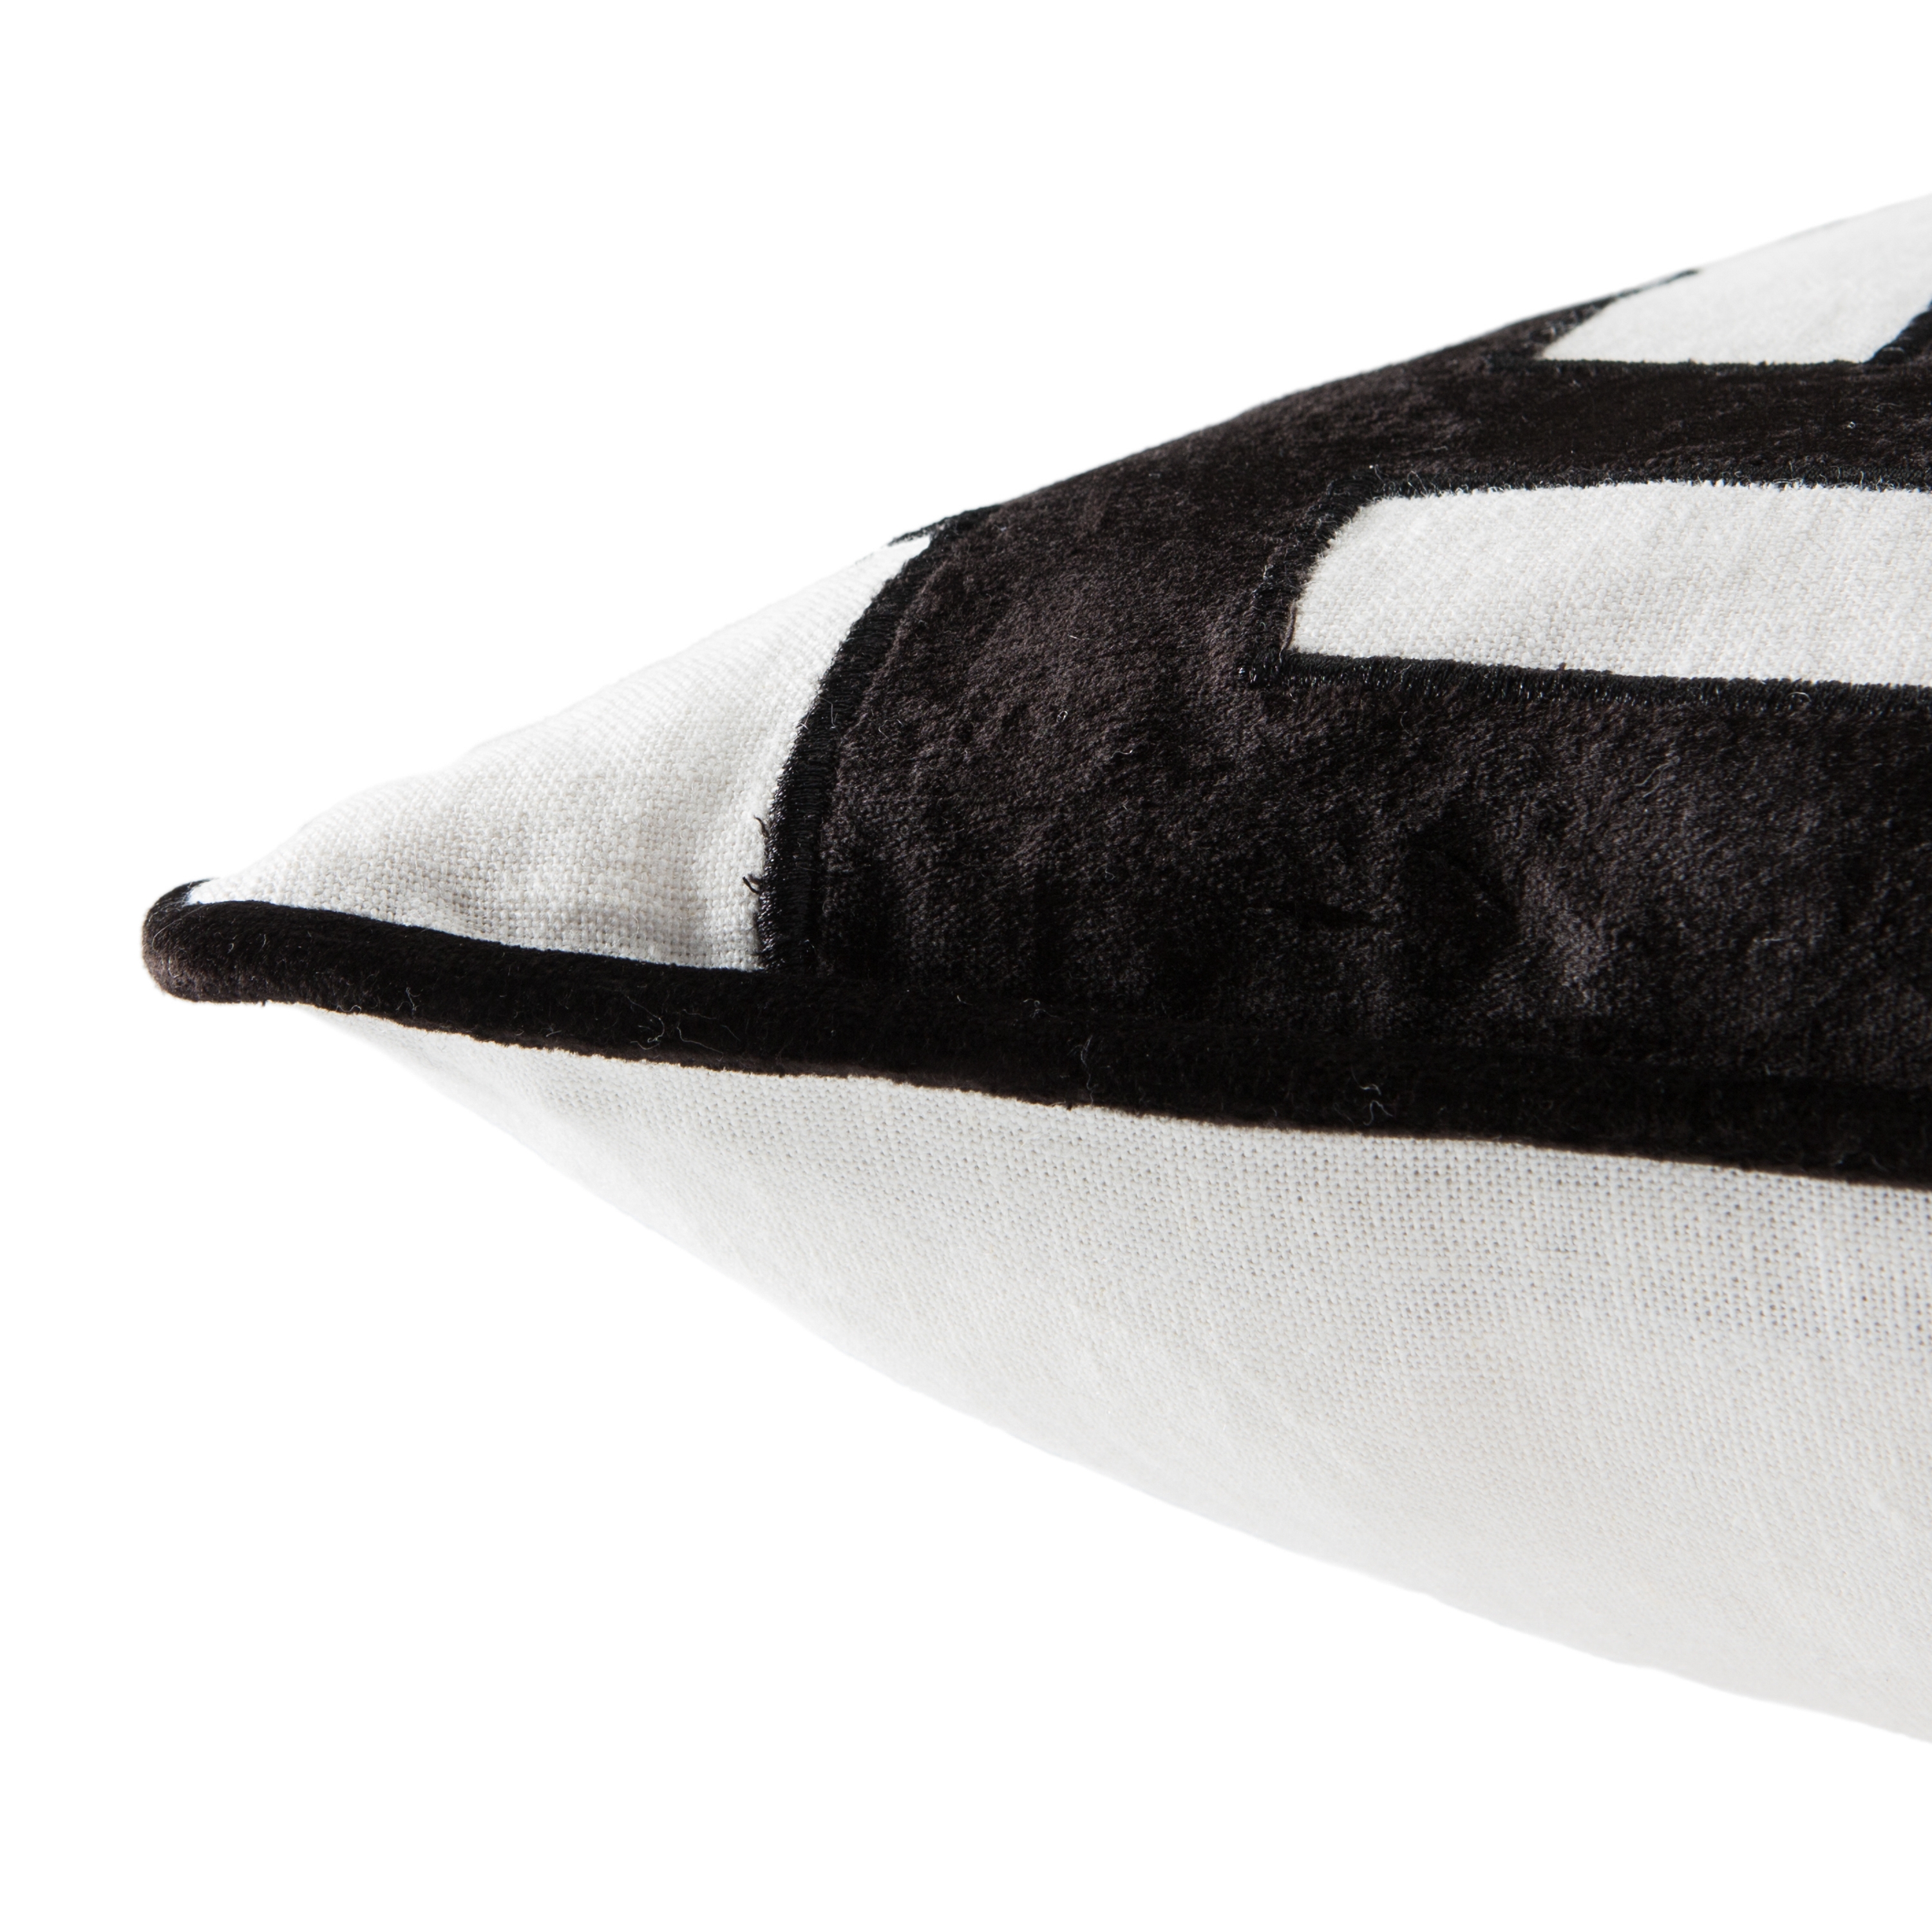 Design (US) White 22"X22" Pillow - Image 2